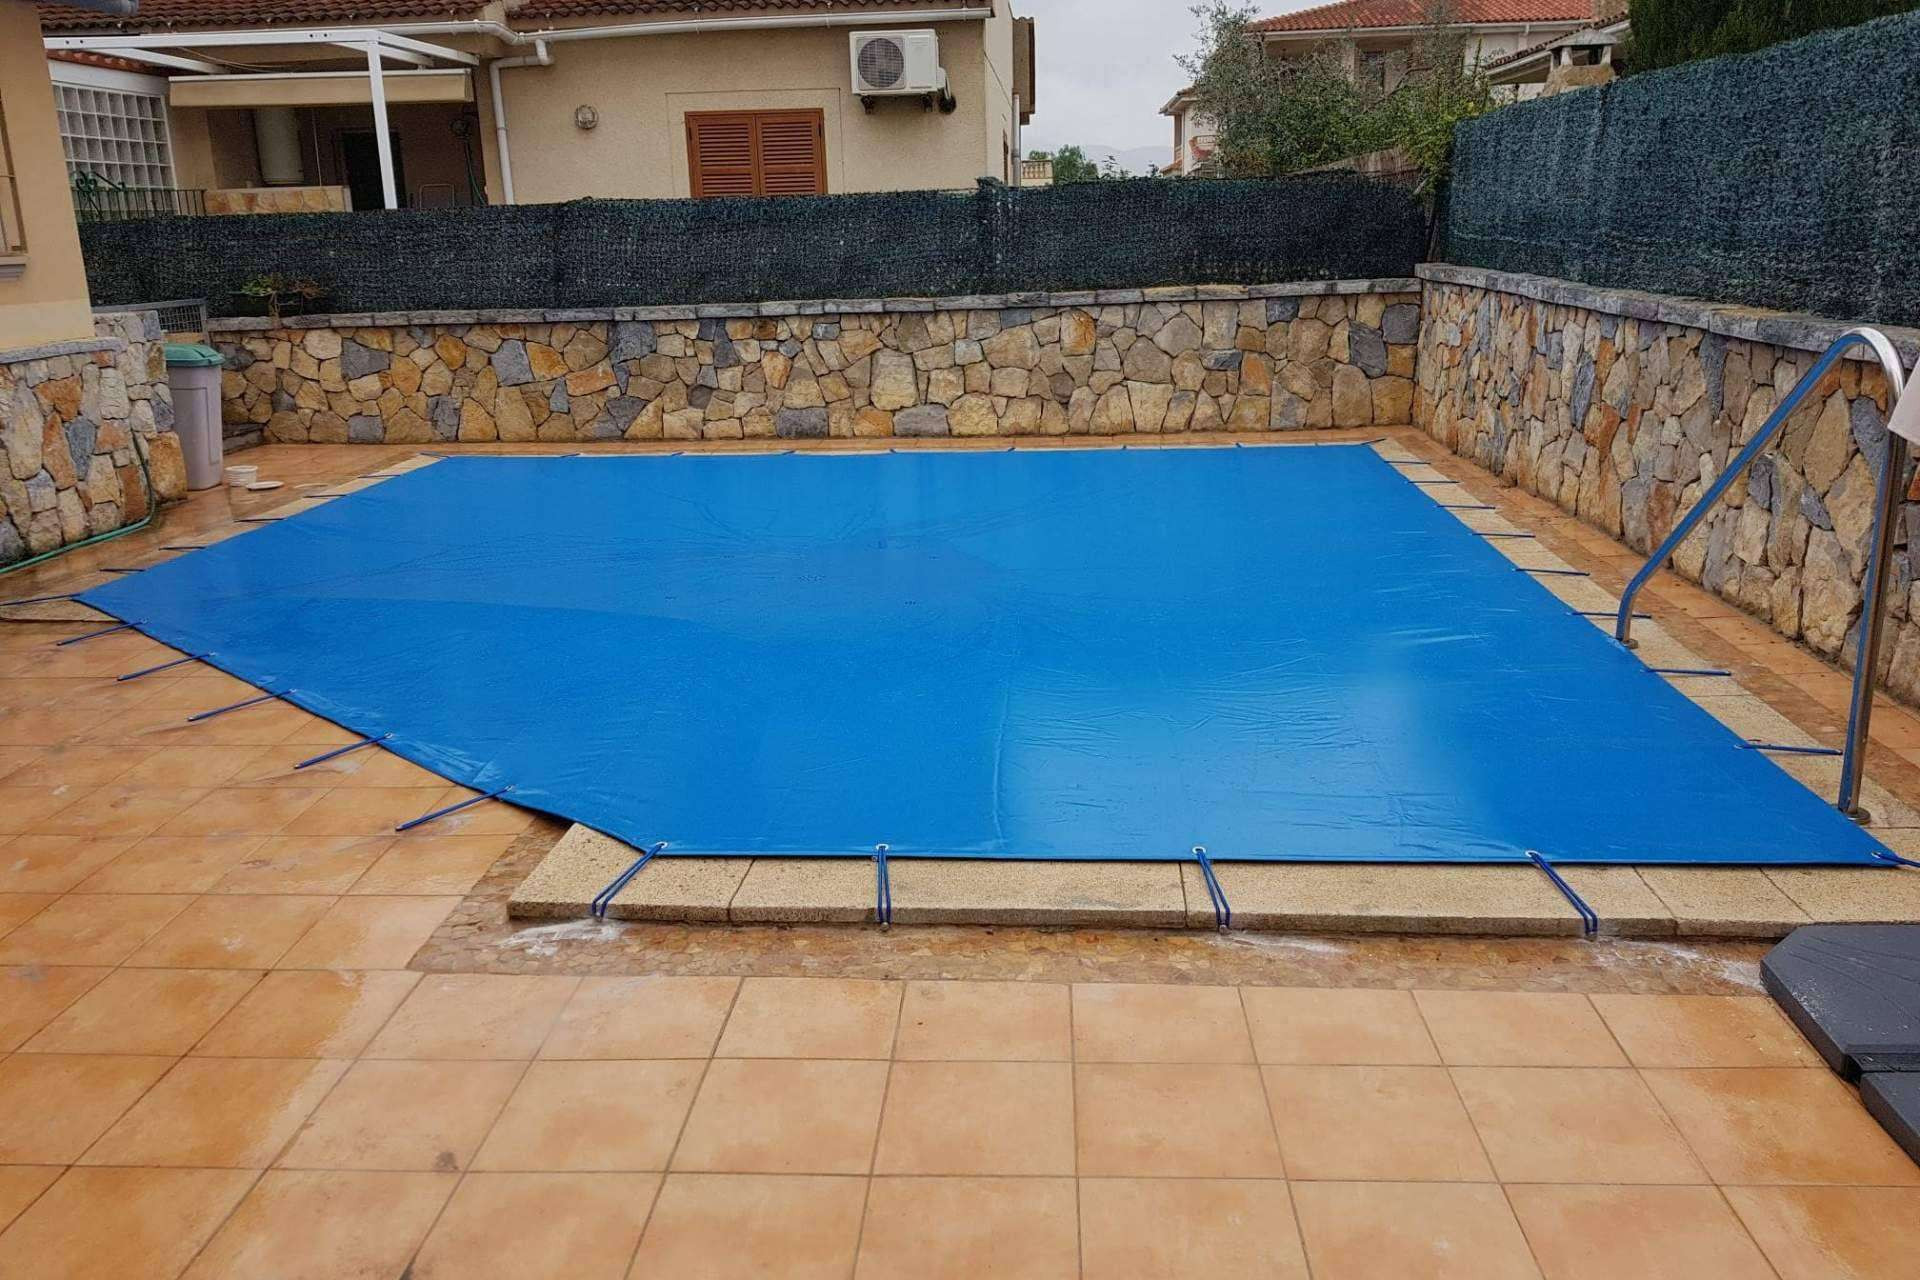 Cobertor de barras piscina - International Coverpool